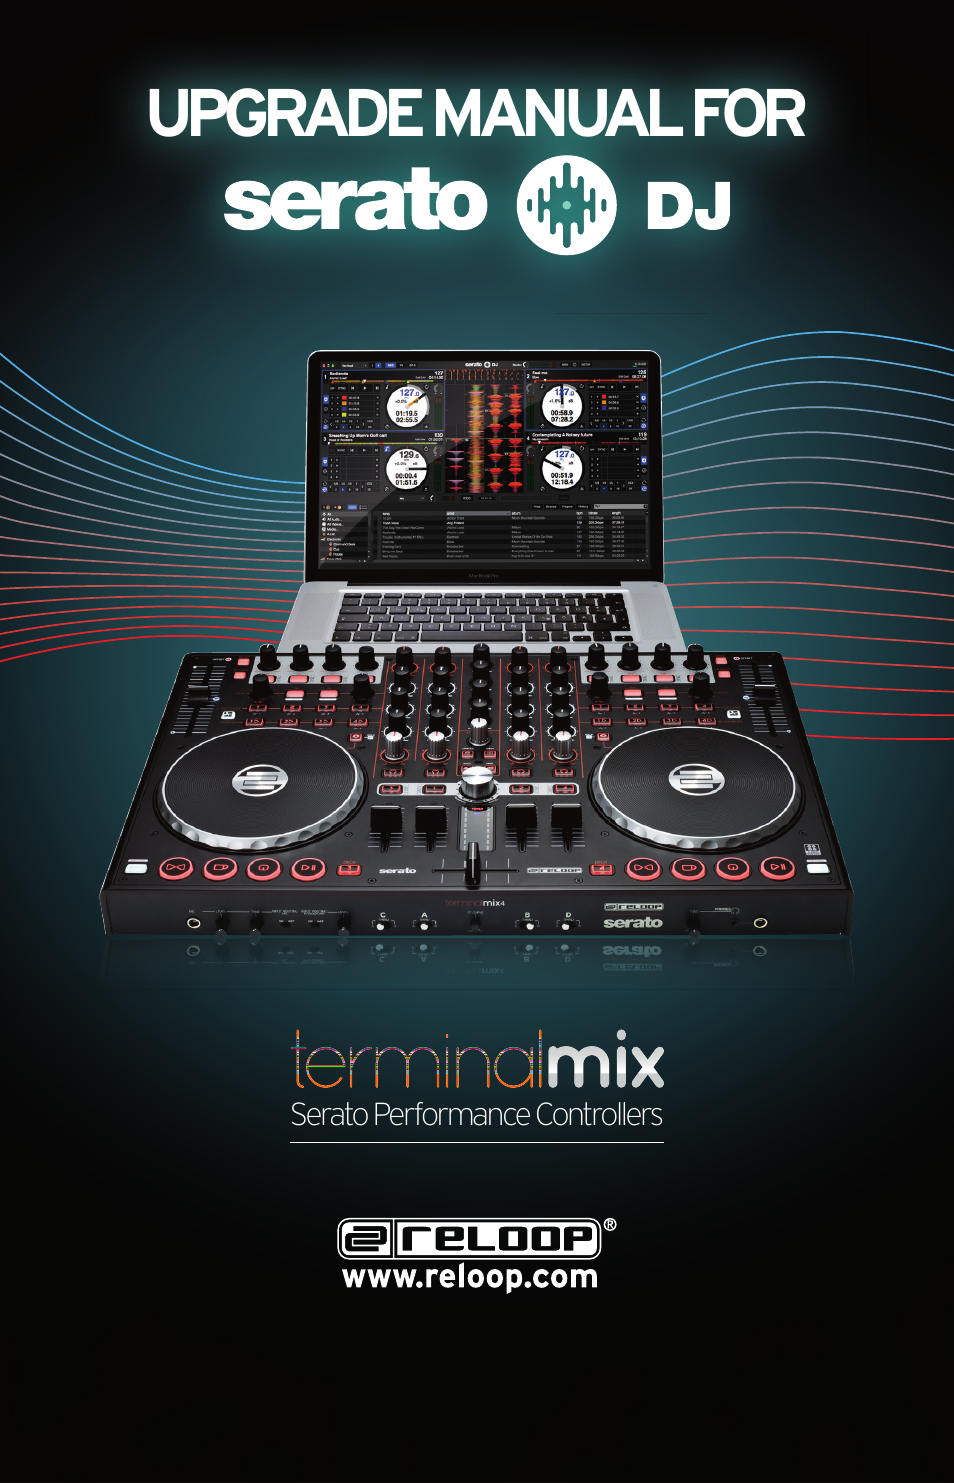 TERMINAL MIX 2 - Upgrade Manual For Serato DJ